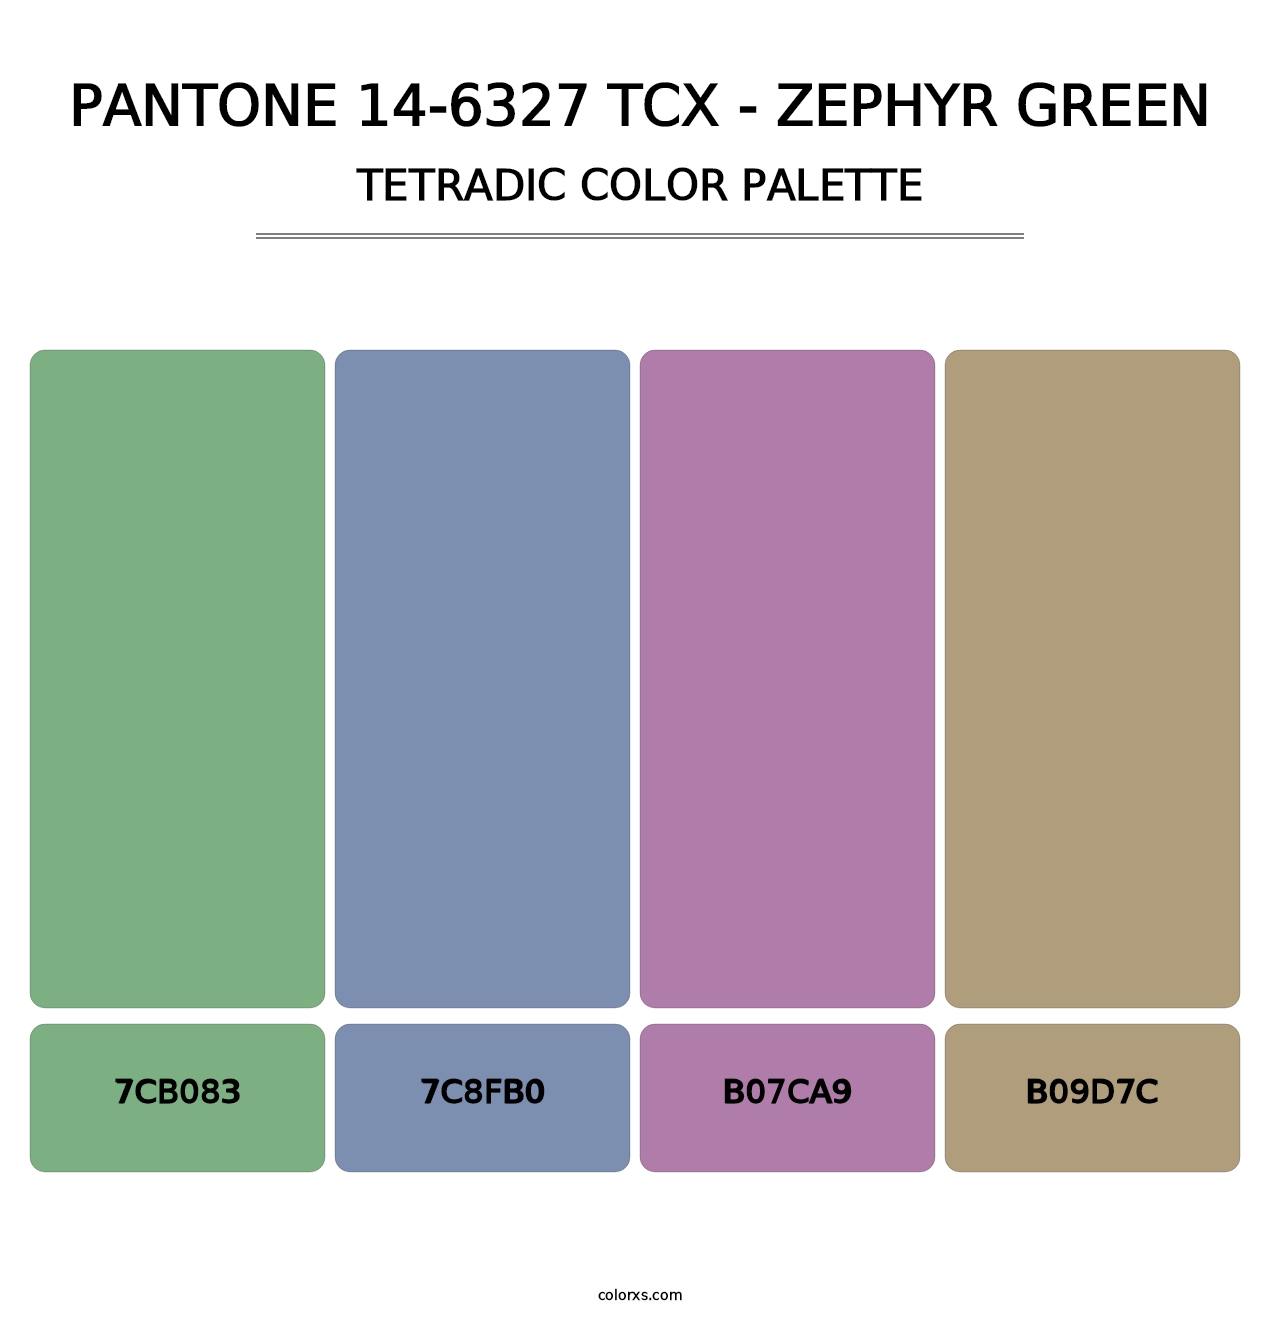 PANTONE 14-6327 TCX - Zephyr Green - Tetradic Color Palette